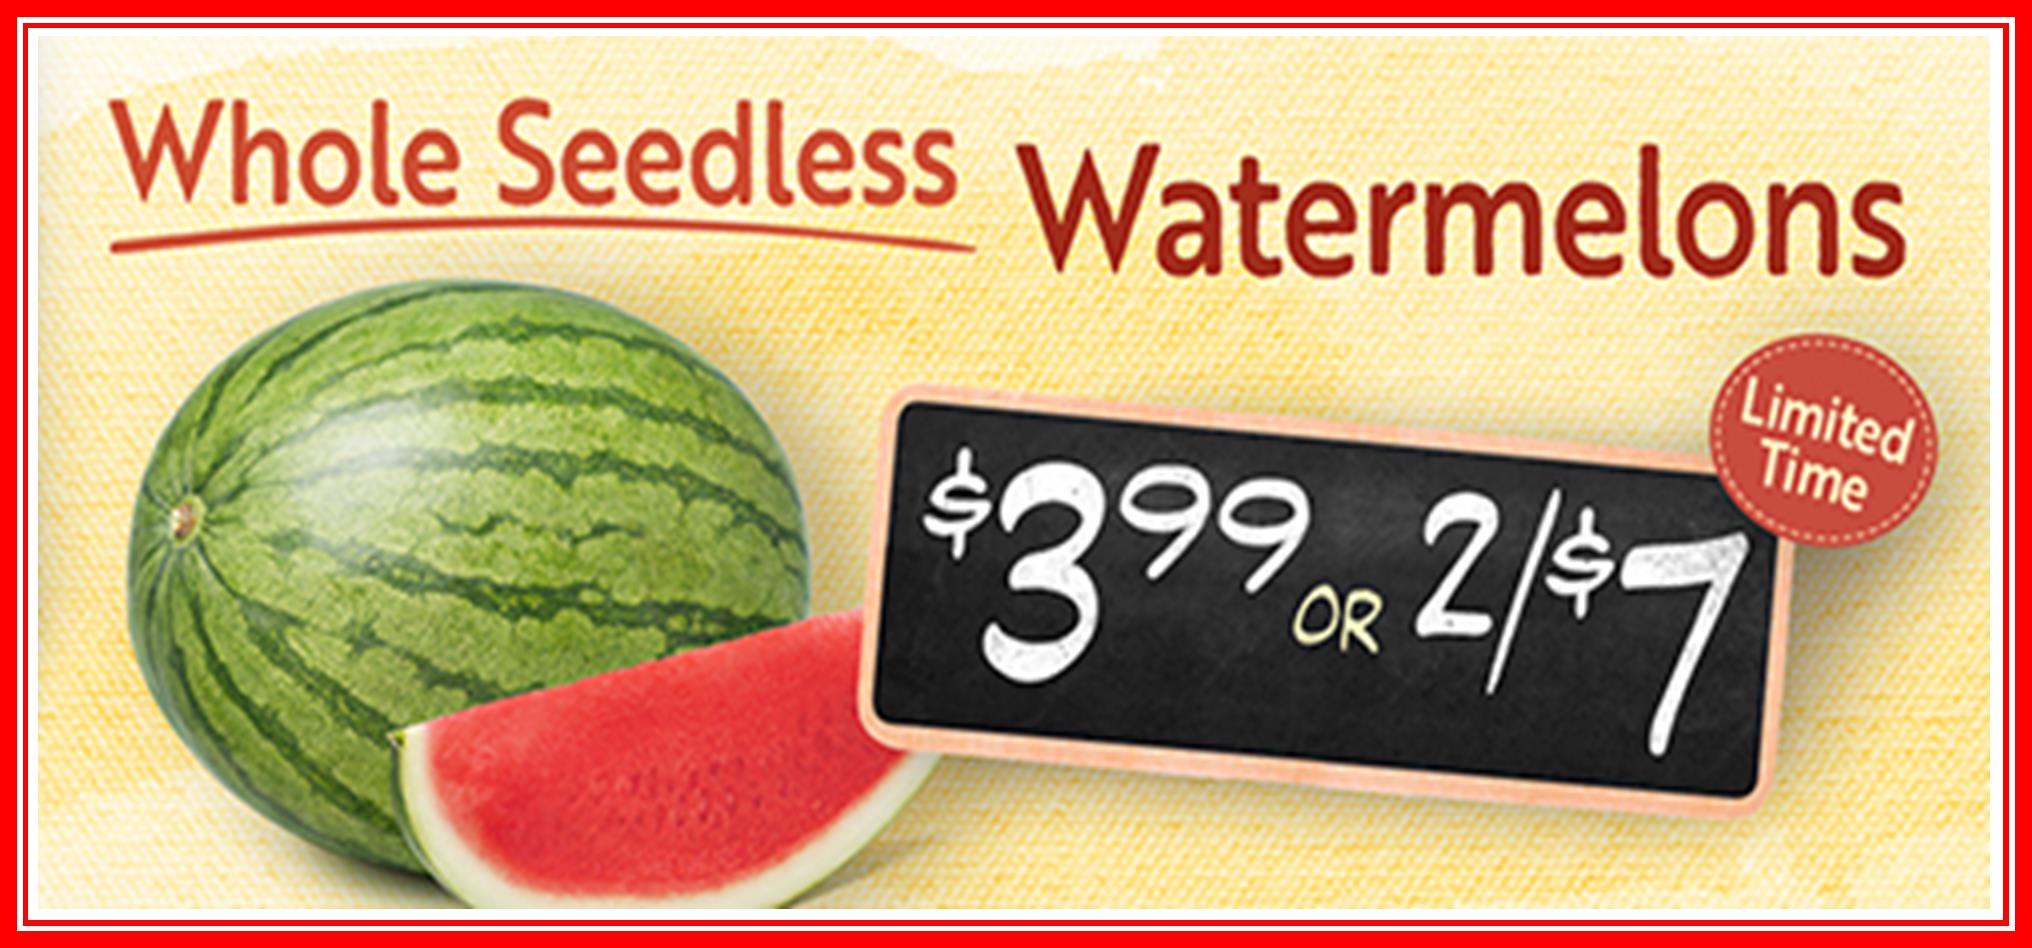 Watermelon 399 2for7.jpg